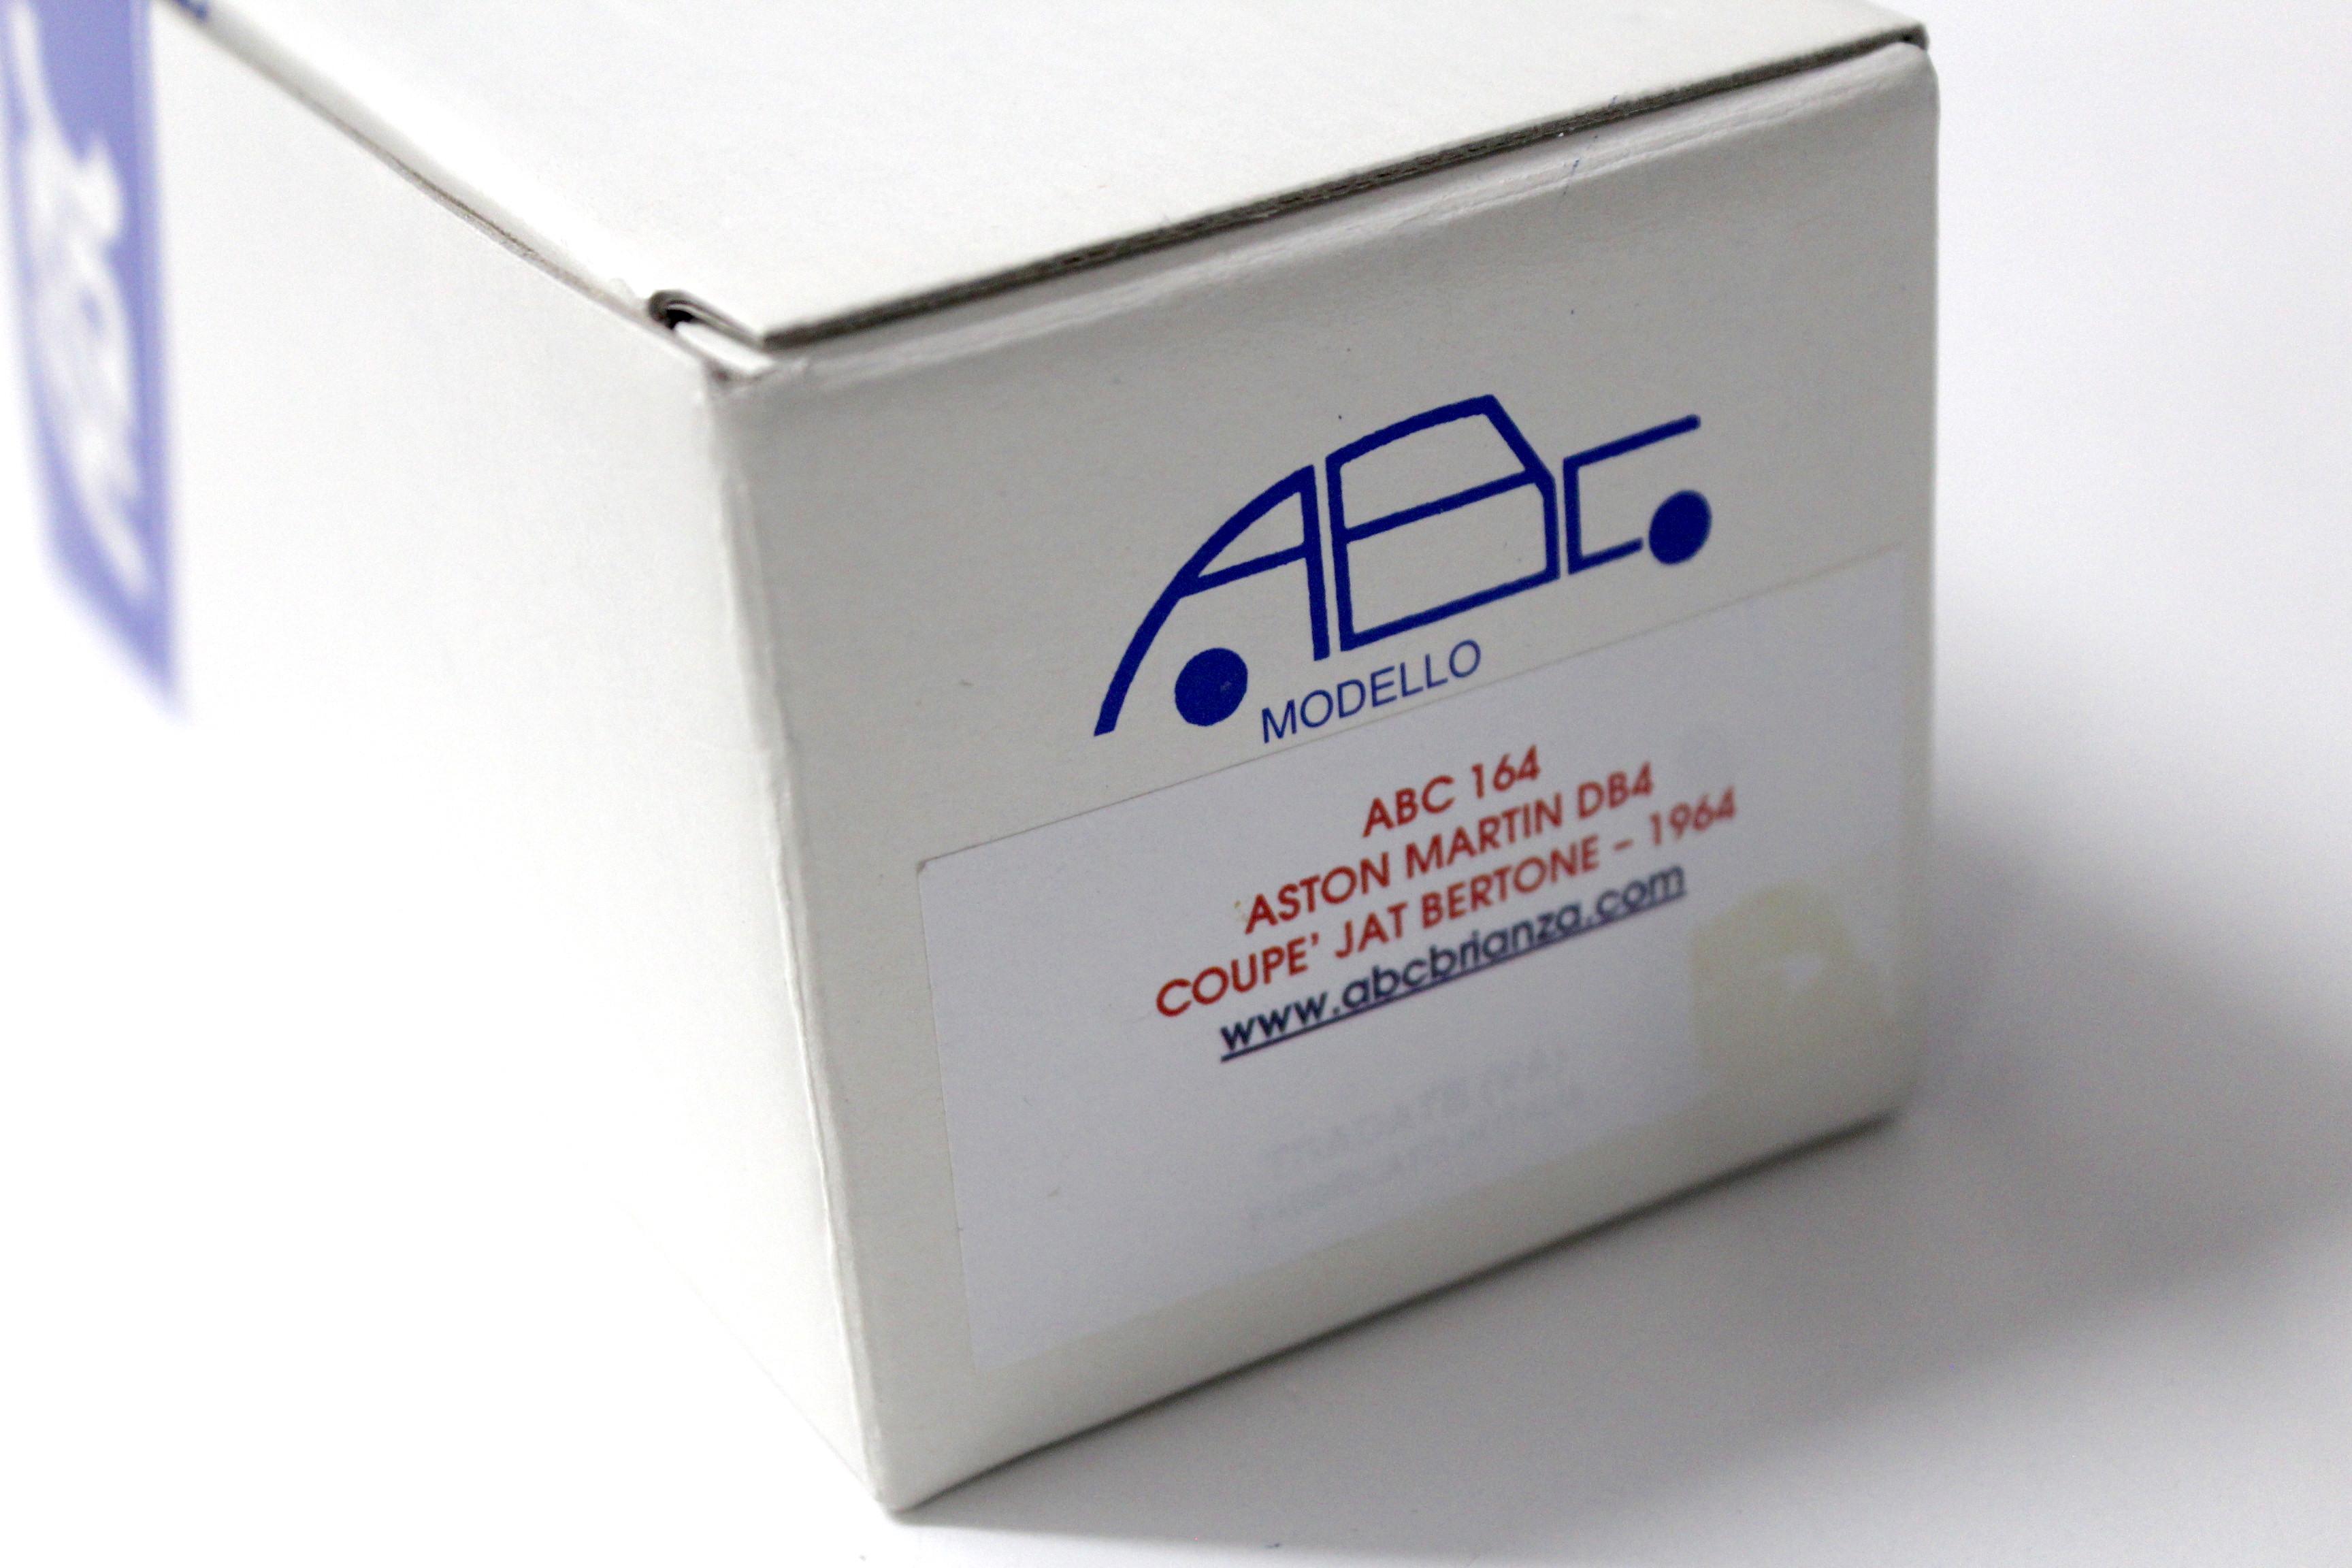 1:43 ABC Brianza Aston Martin Coupe Jat Bertone 1964 grey metallic